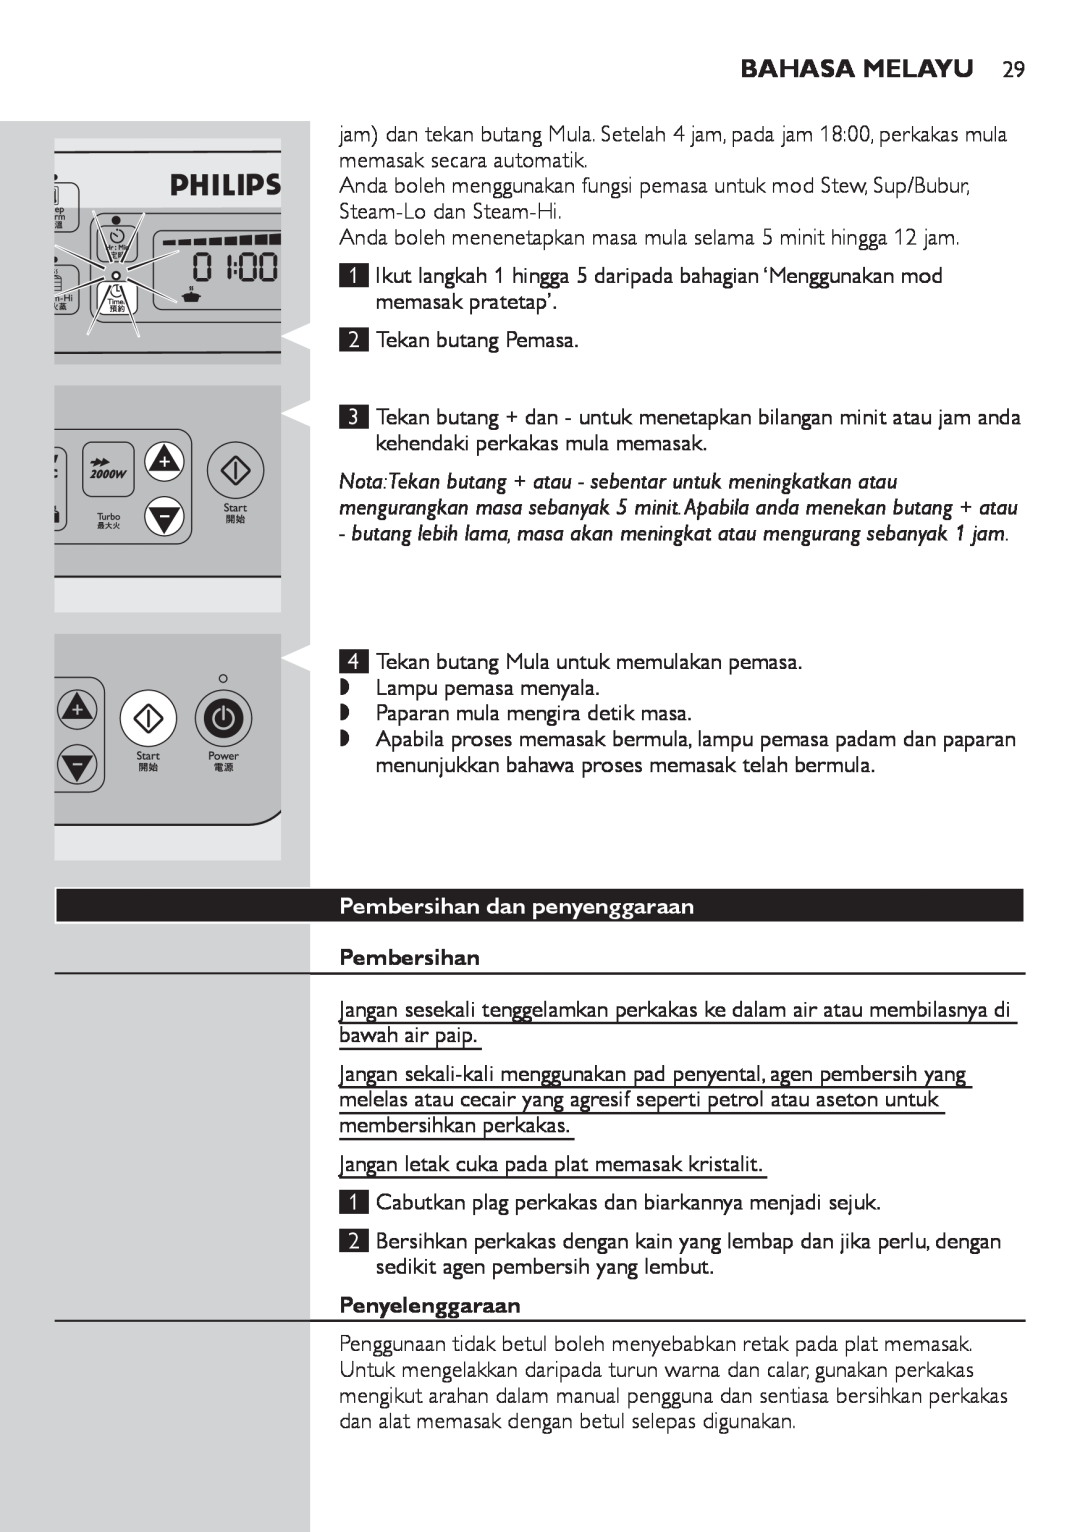 Philips HD4918 manual Bahasa Melayu, Pembersihan dan penyenggaraan, Penyelenggaraan 